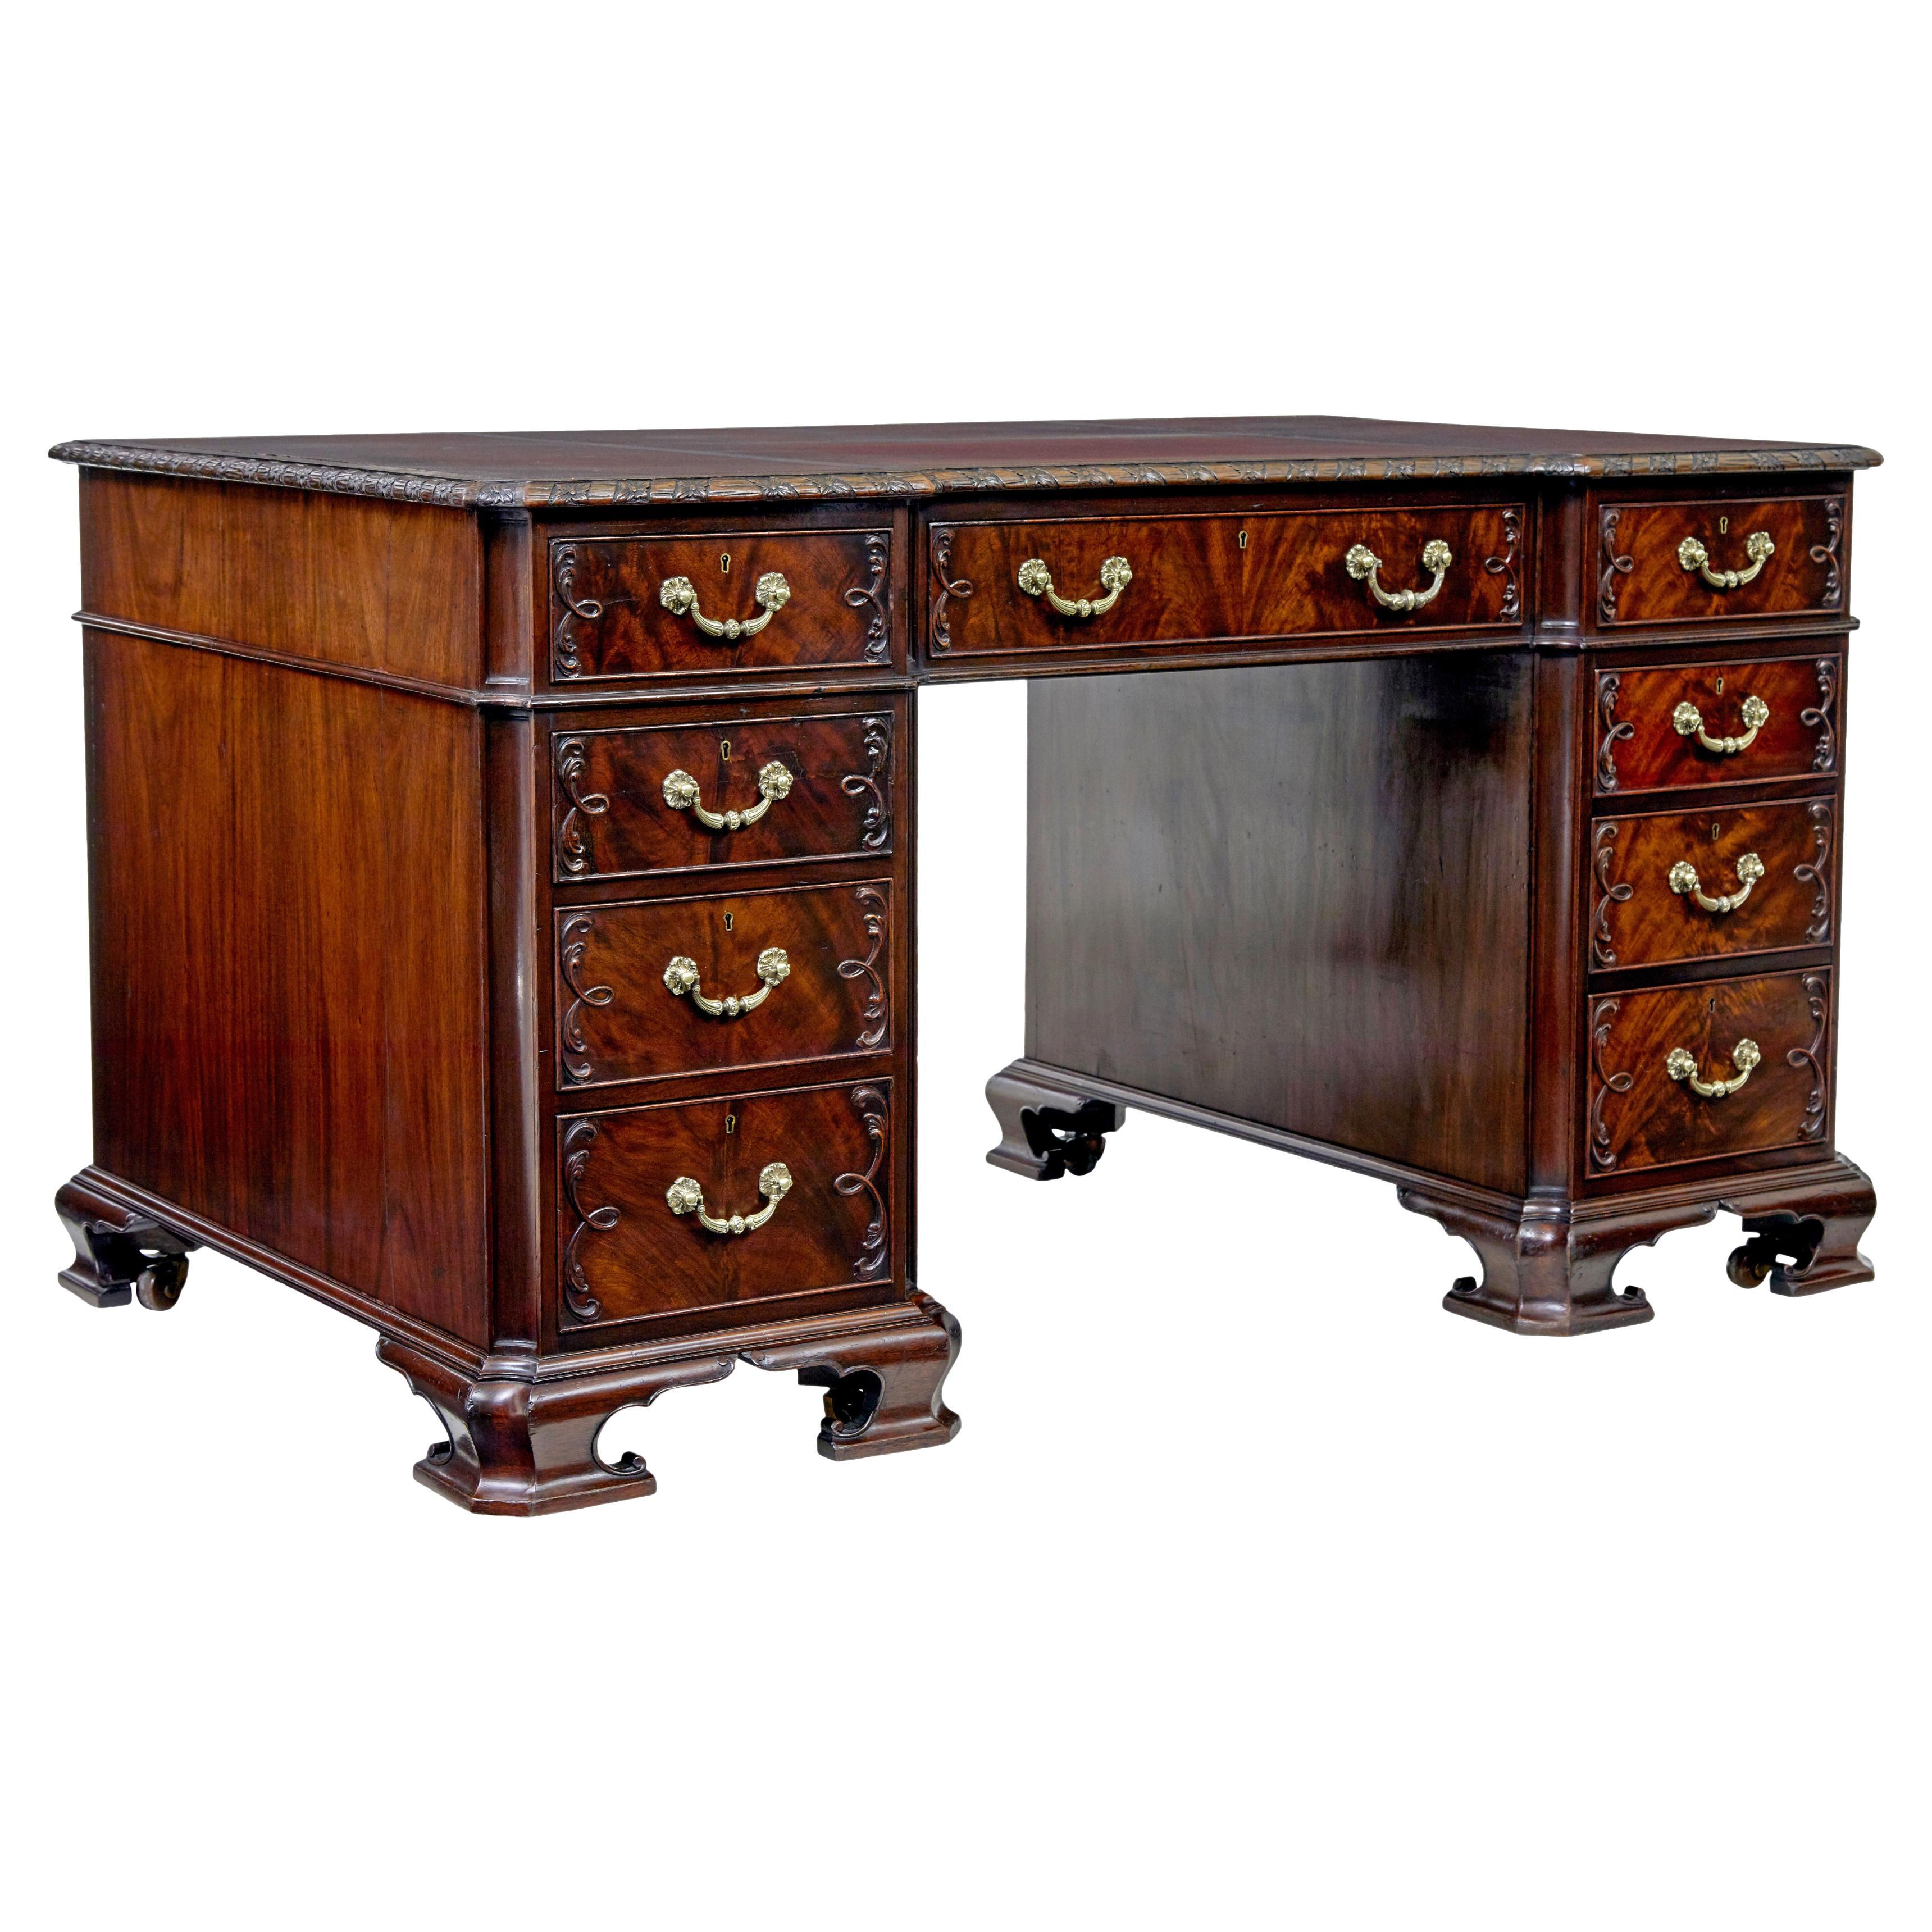 Early 20th century mahogany pedestal desk by Hobbs & Co